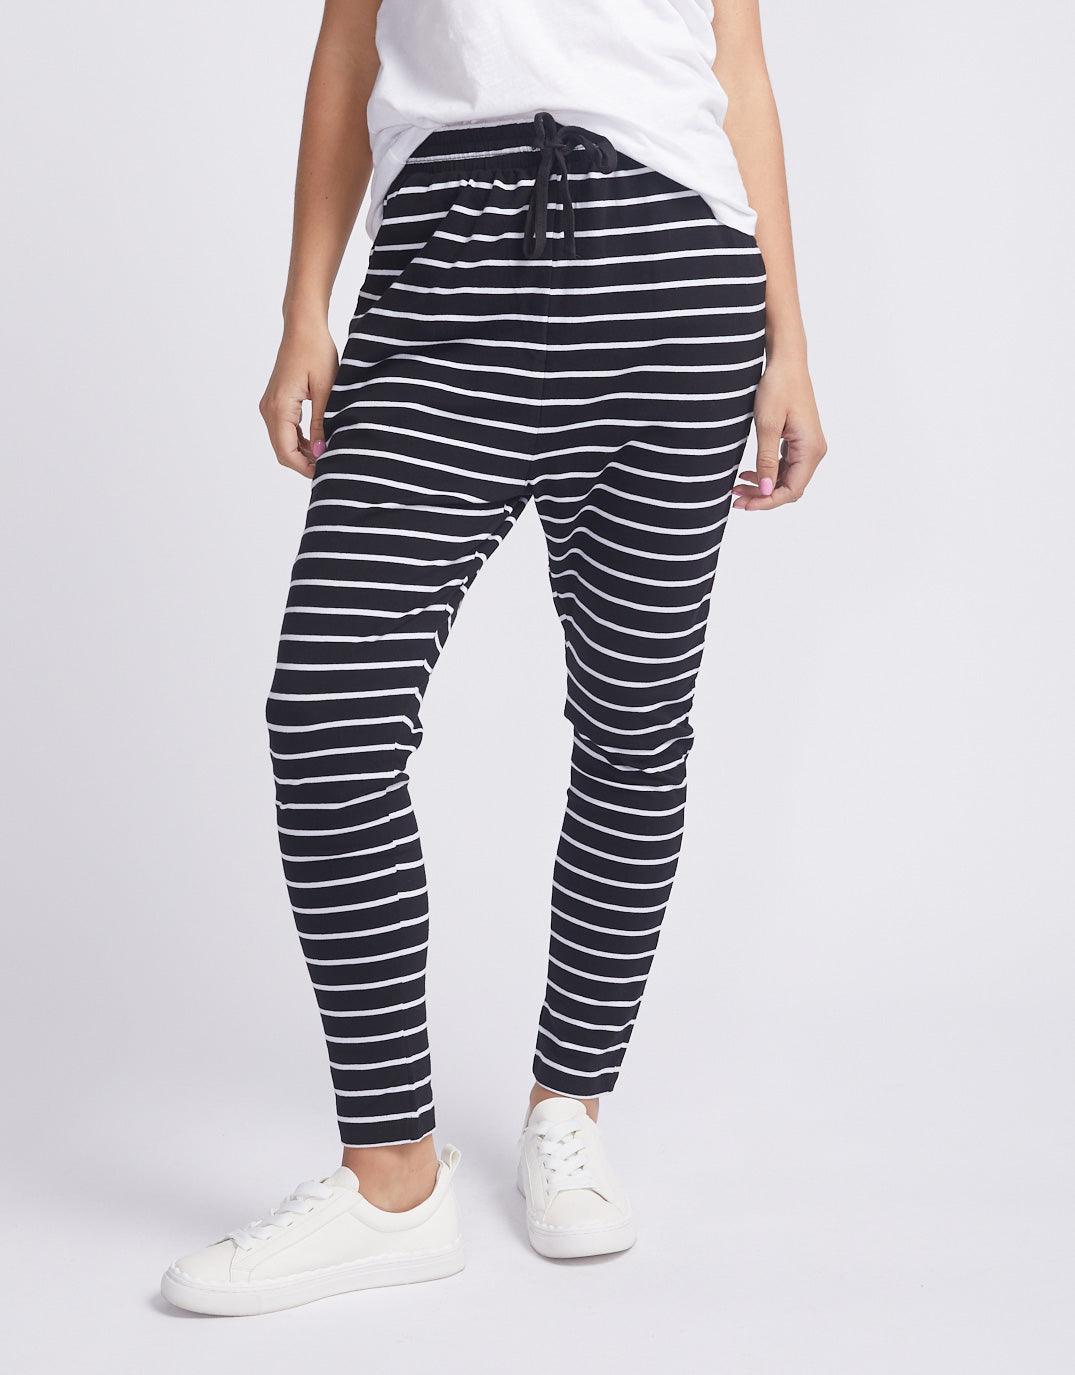 Betty Basics - Jade Lounge Pants - Black/White Stripe - White & Co Living Pants